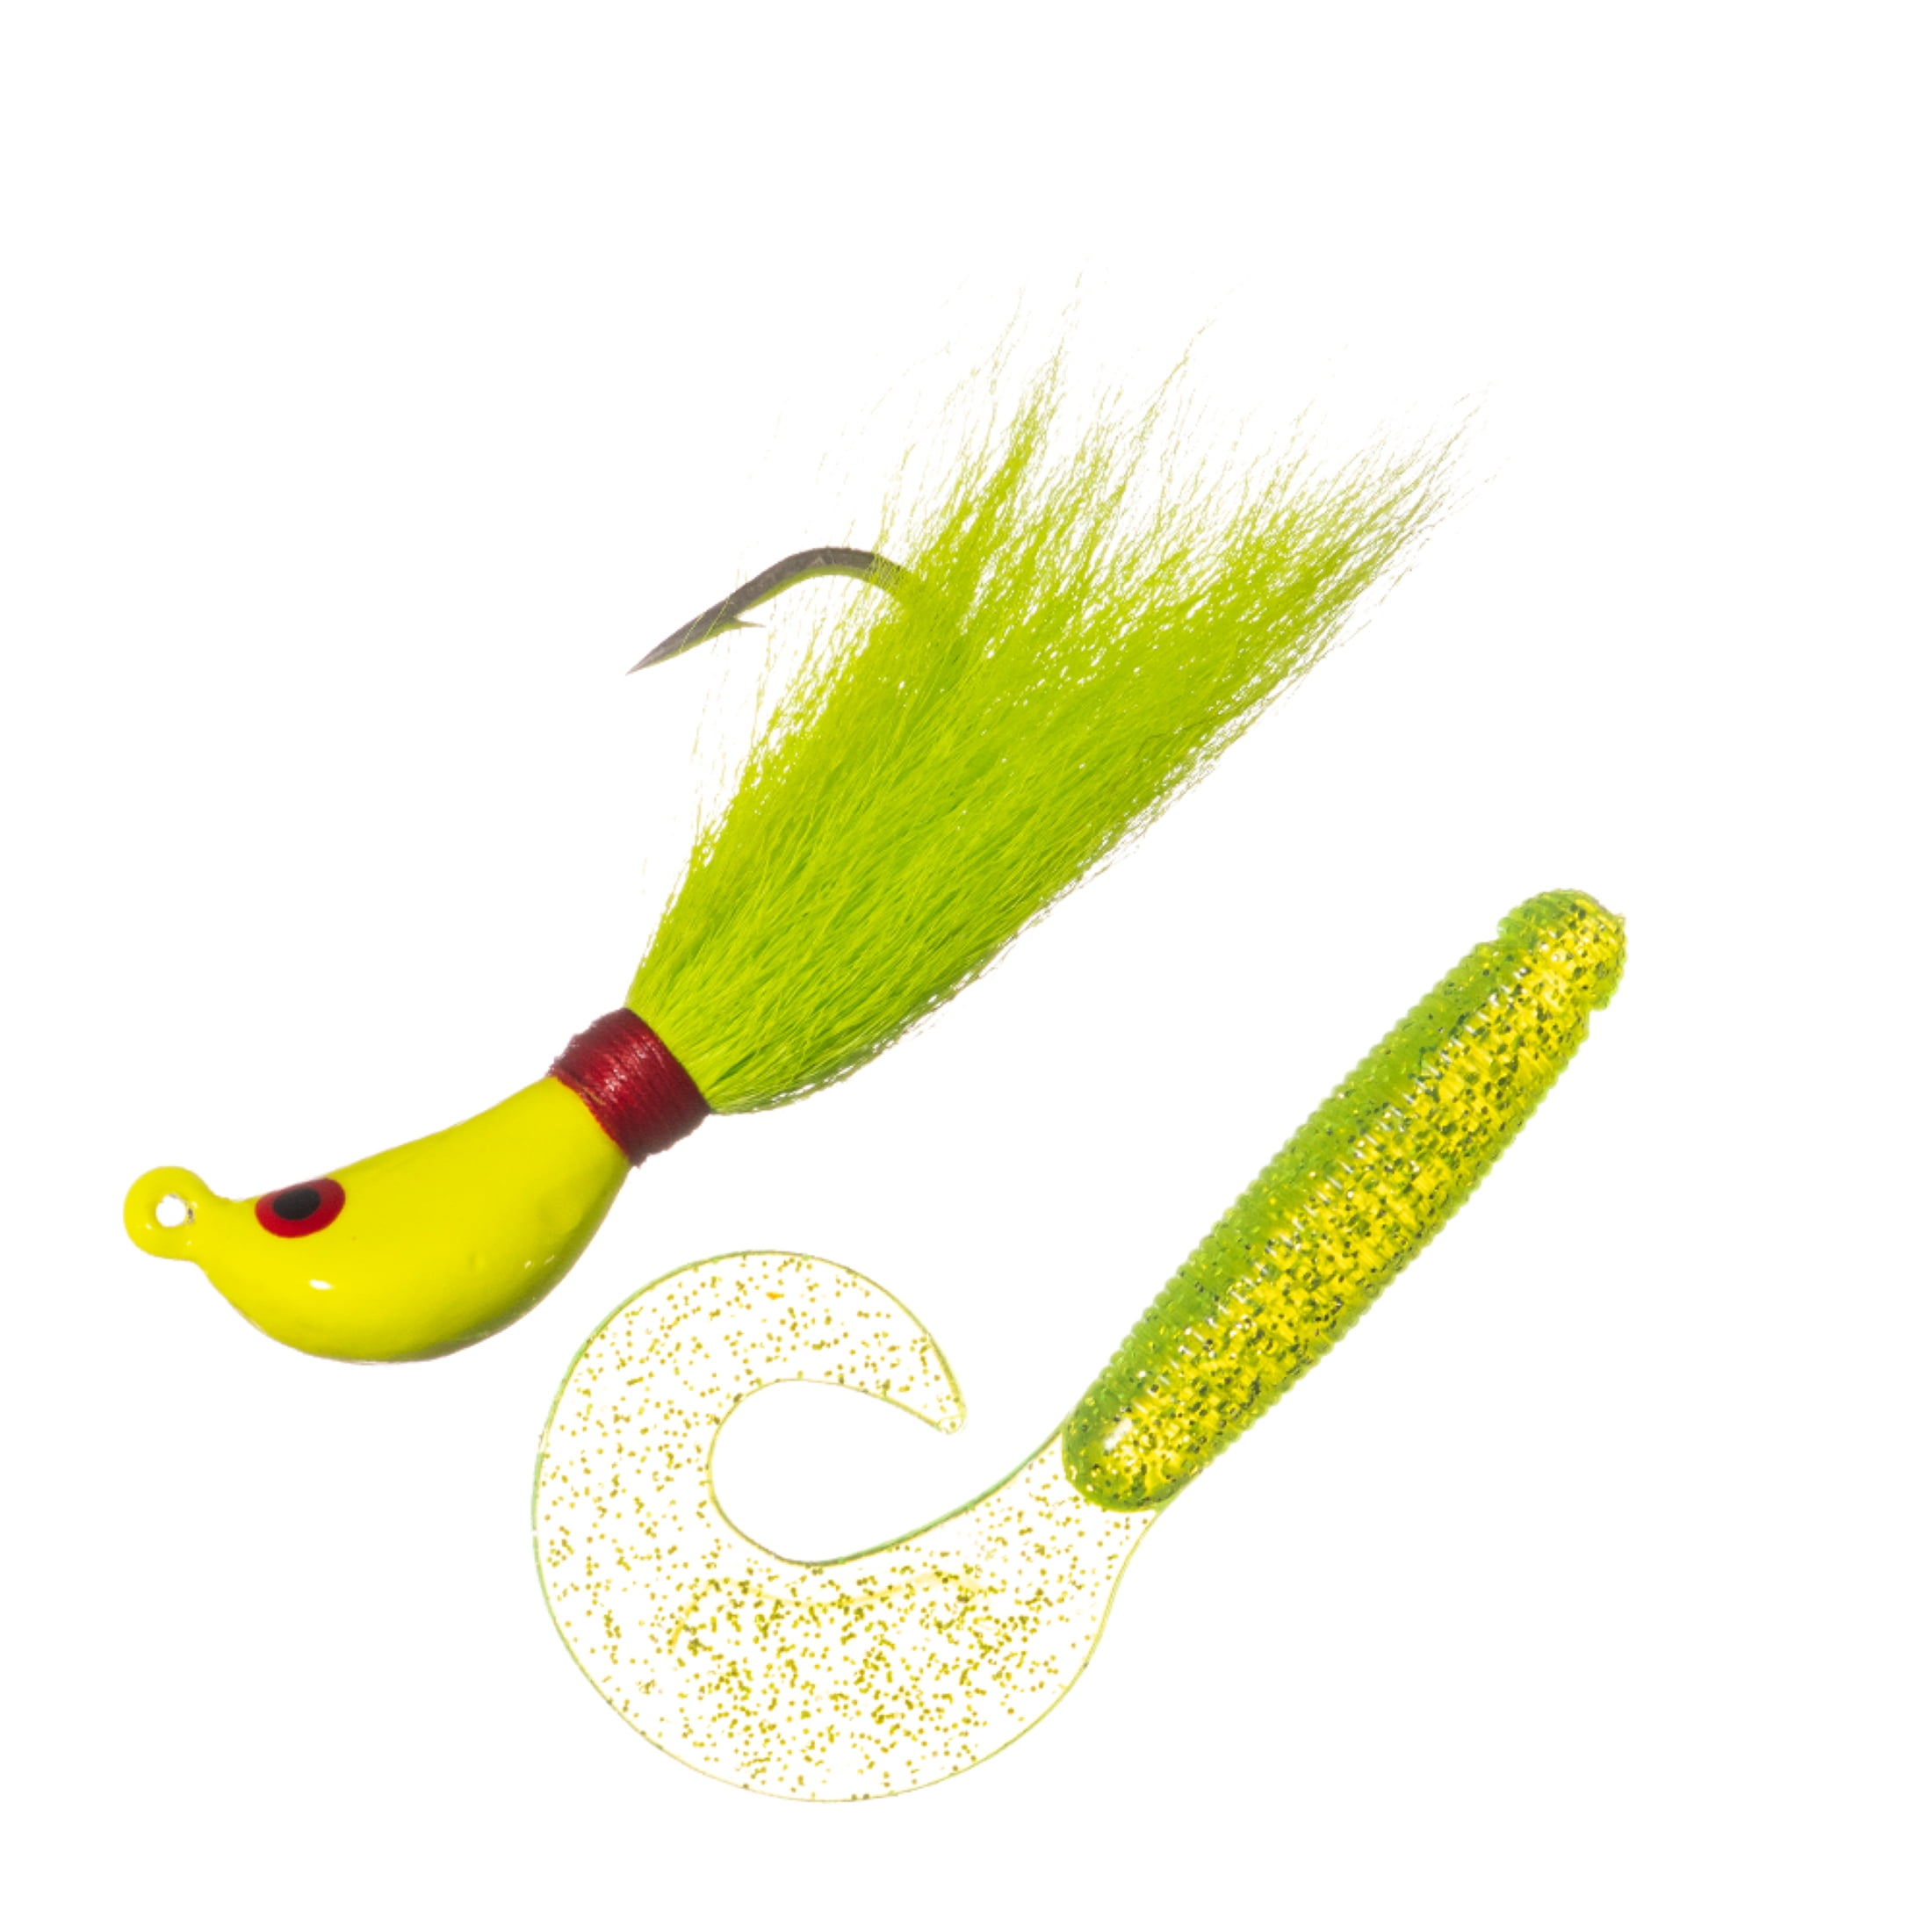 Ocean Logic Striper Fishing Jig, Color Chartreuse, Size 2 oz